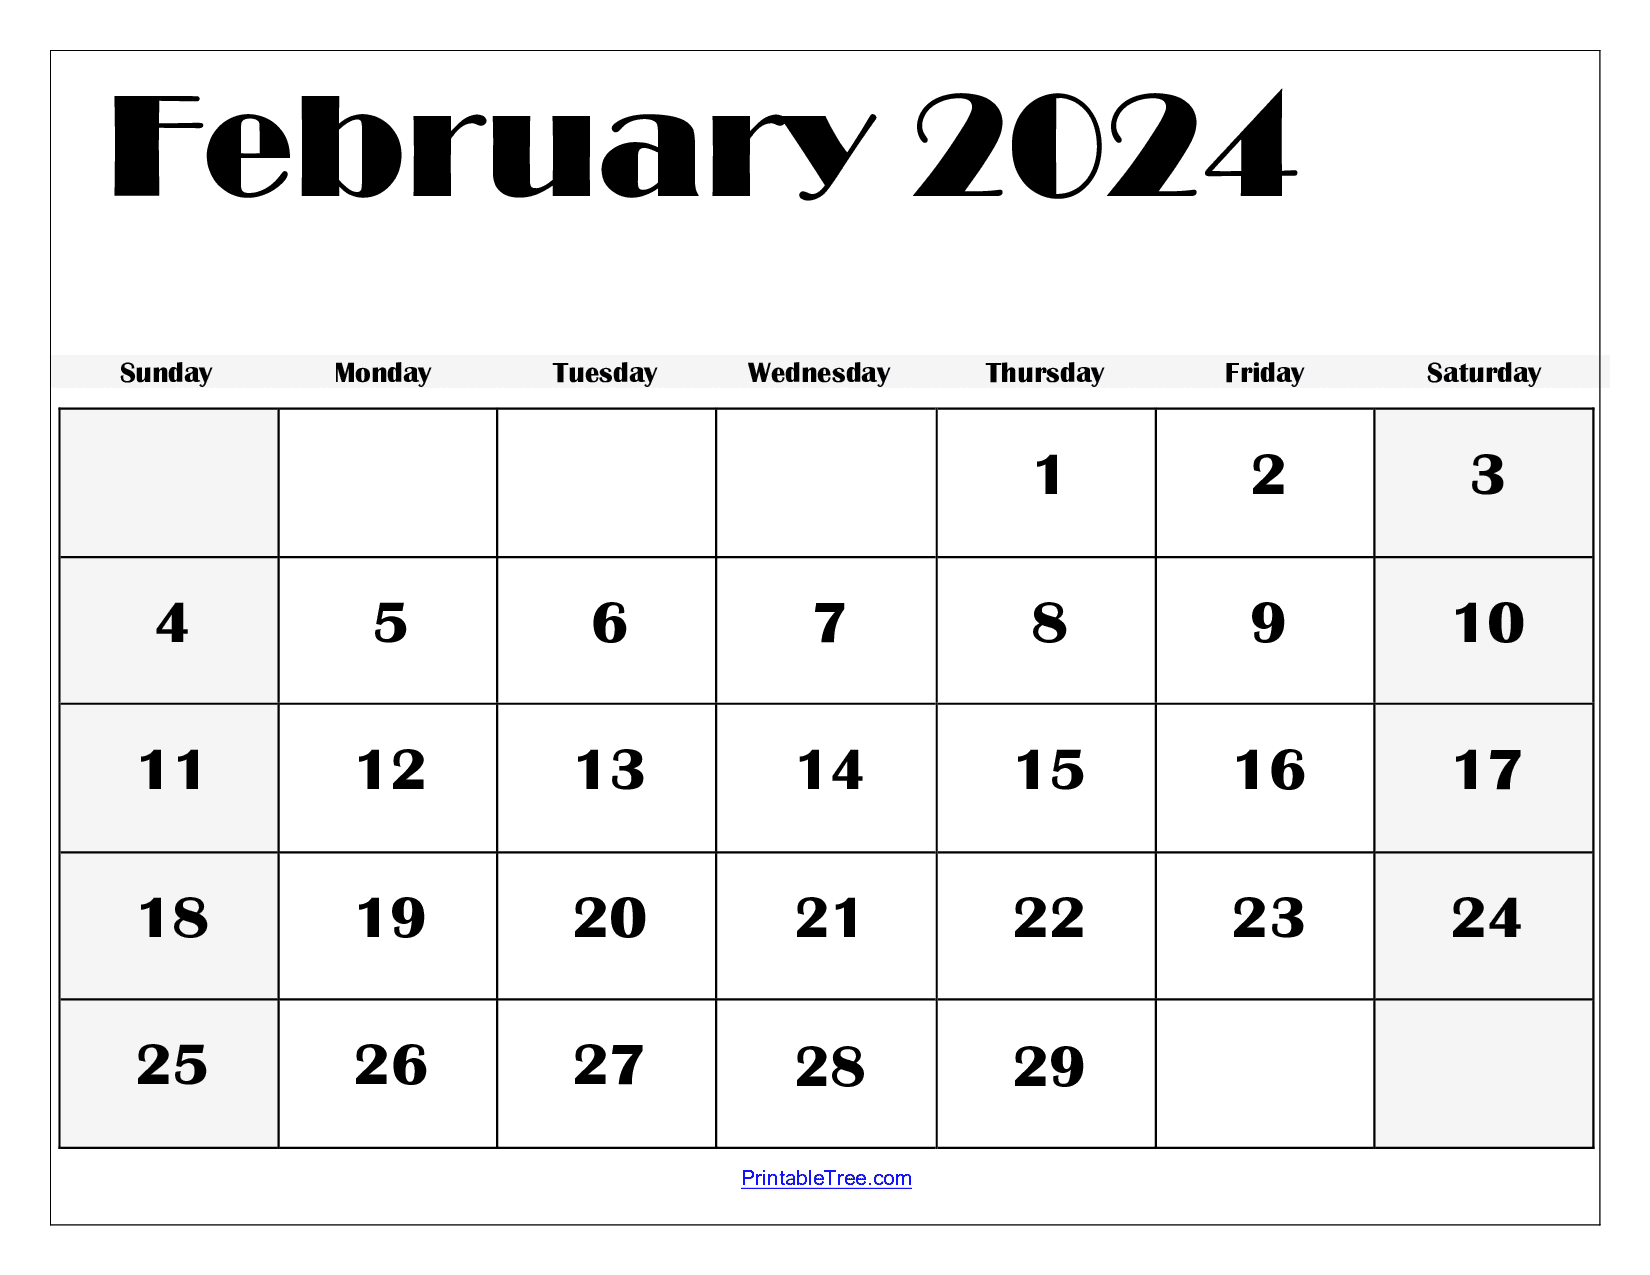 February 2024 Calendar Printable Pdf Template With Holidays for February Calendar Free Printable 2024